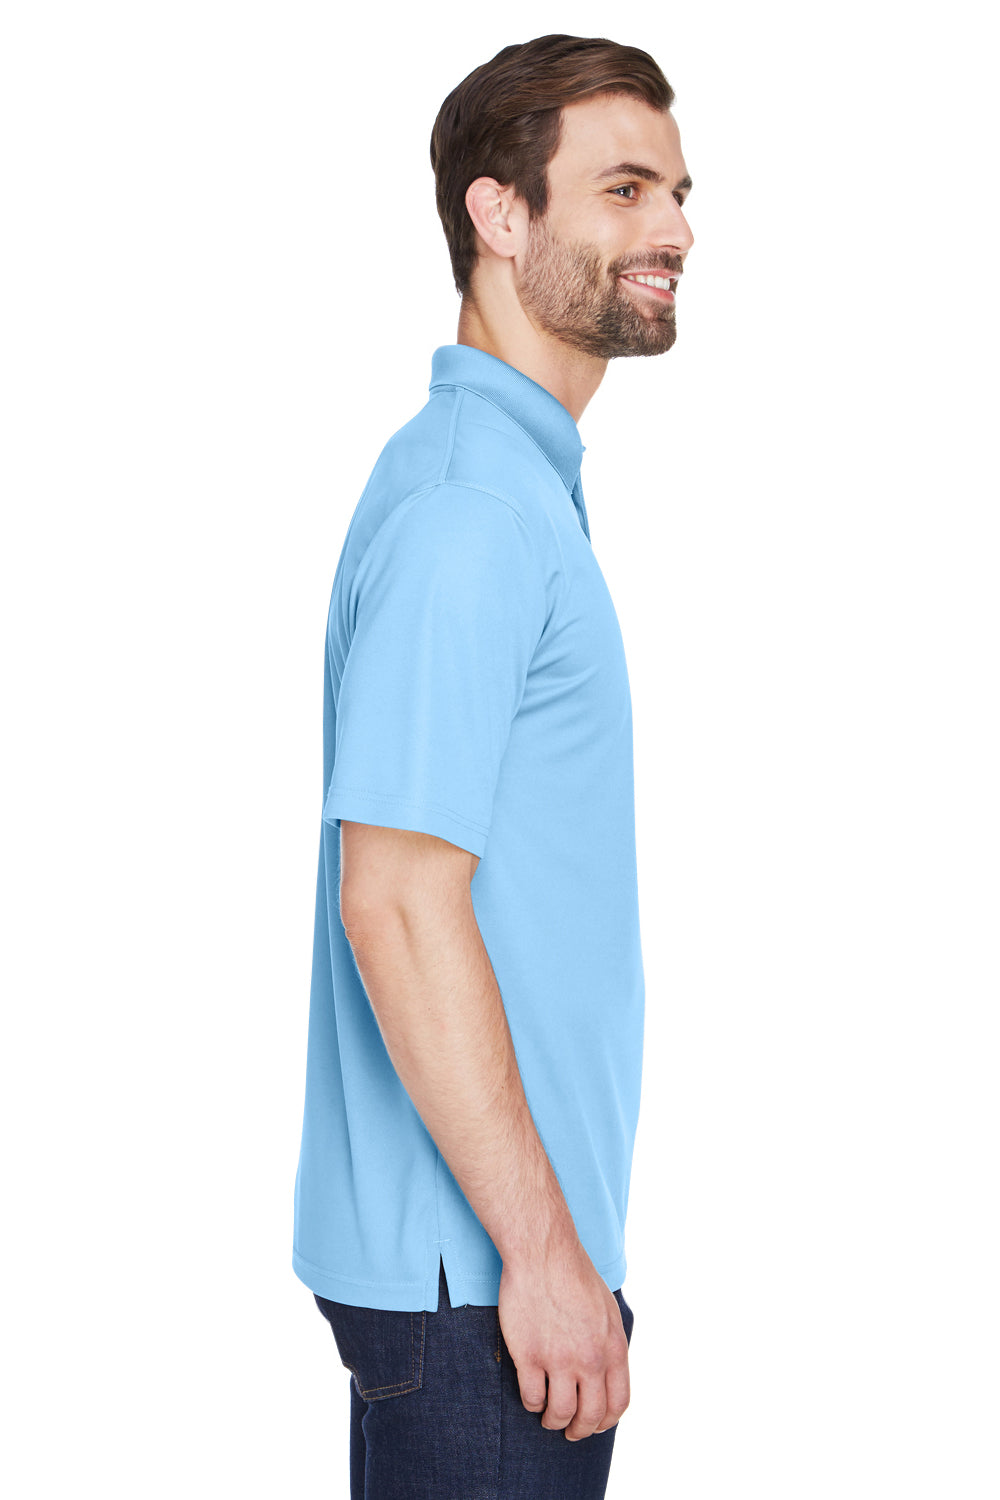 UltraClub 8210 Mens Cool & Dry Moisture Wicking Short Sleeve Polo Shirt Columbia Blue Side